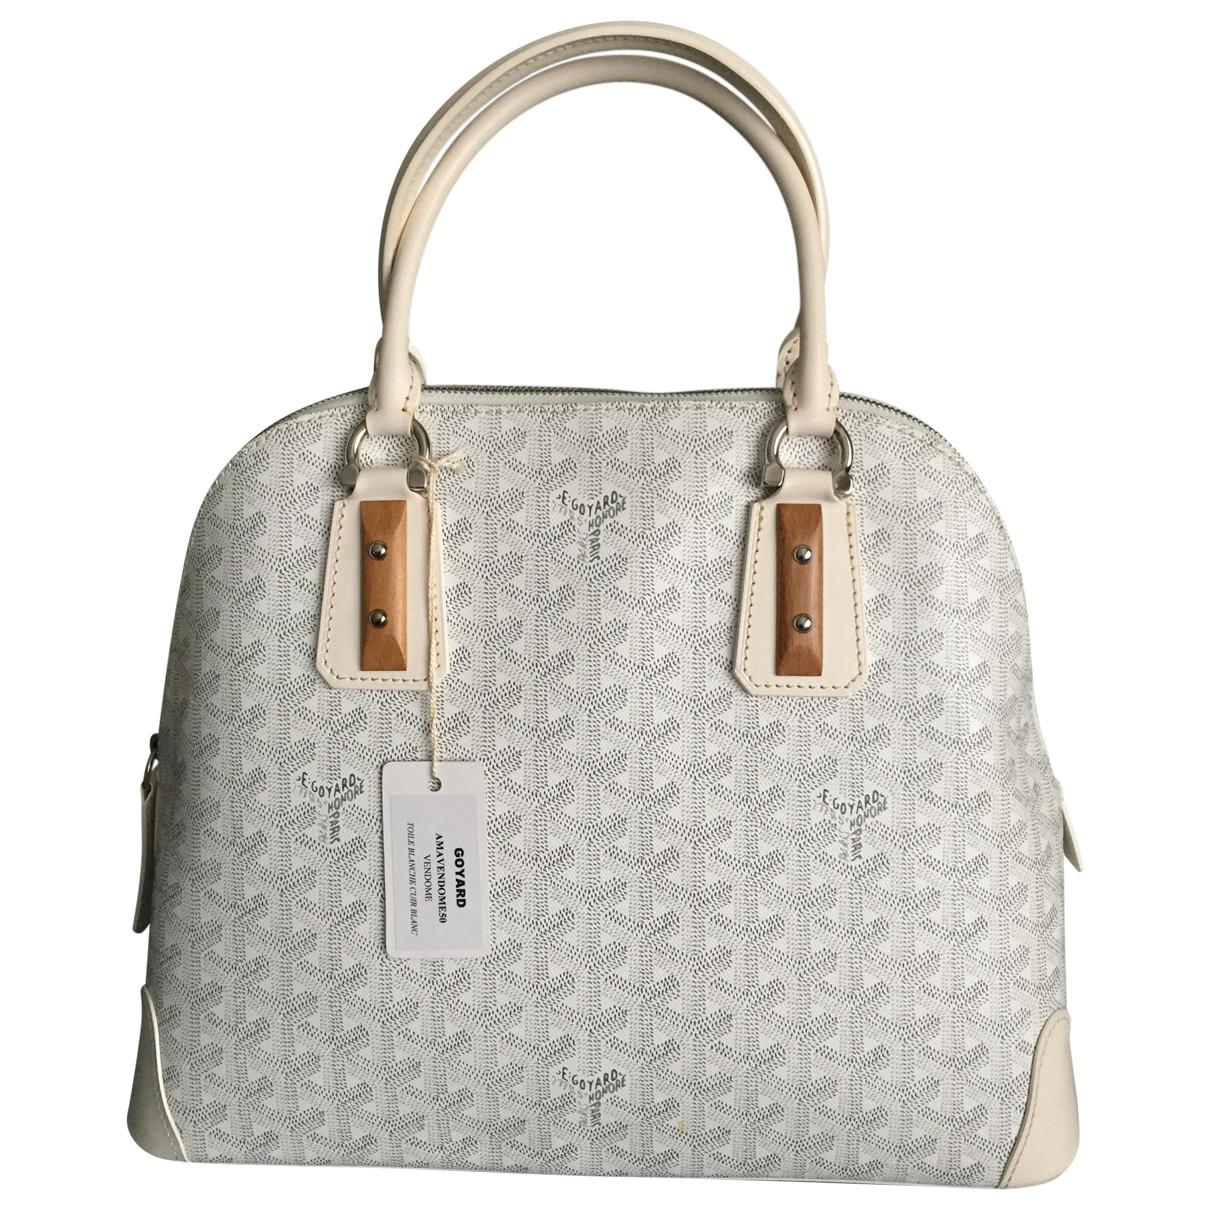 Goyard Vendôme Leather Handbag in White - Lyst